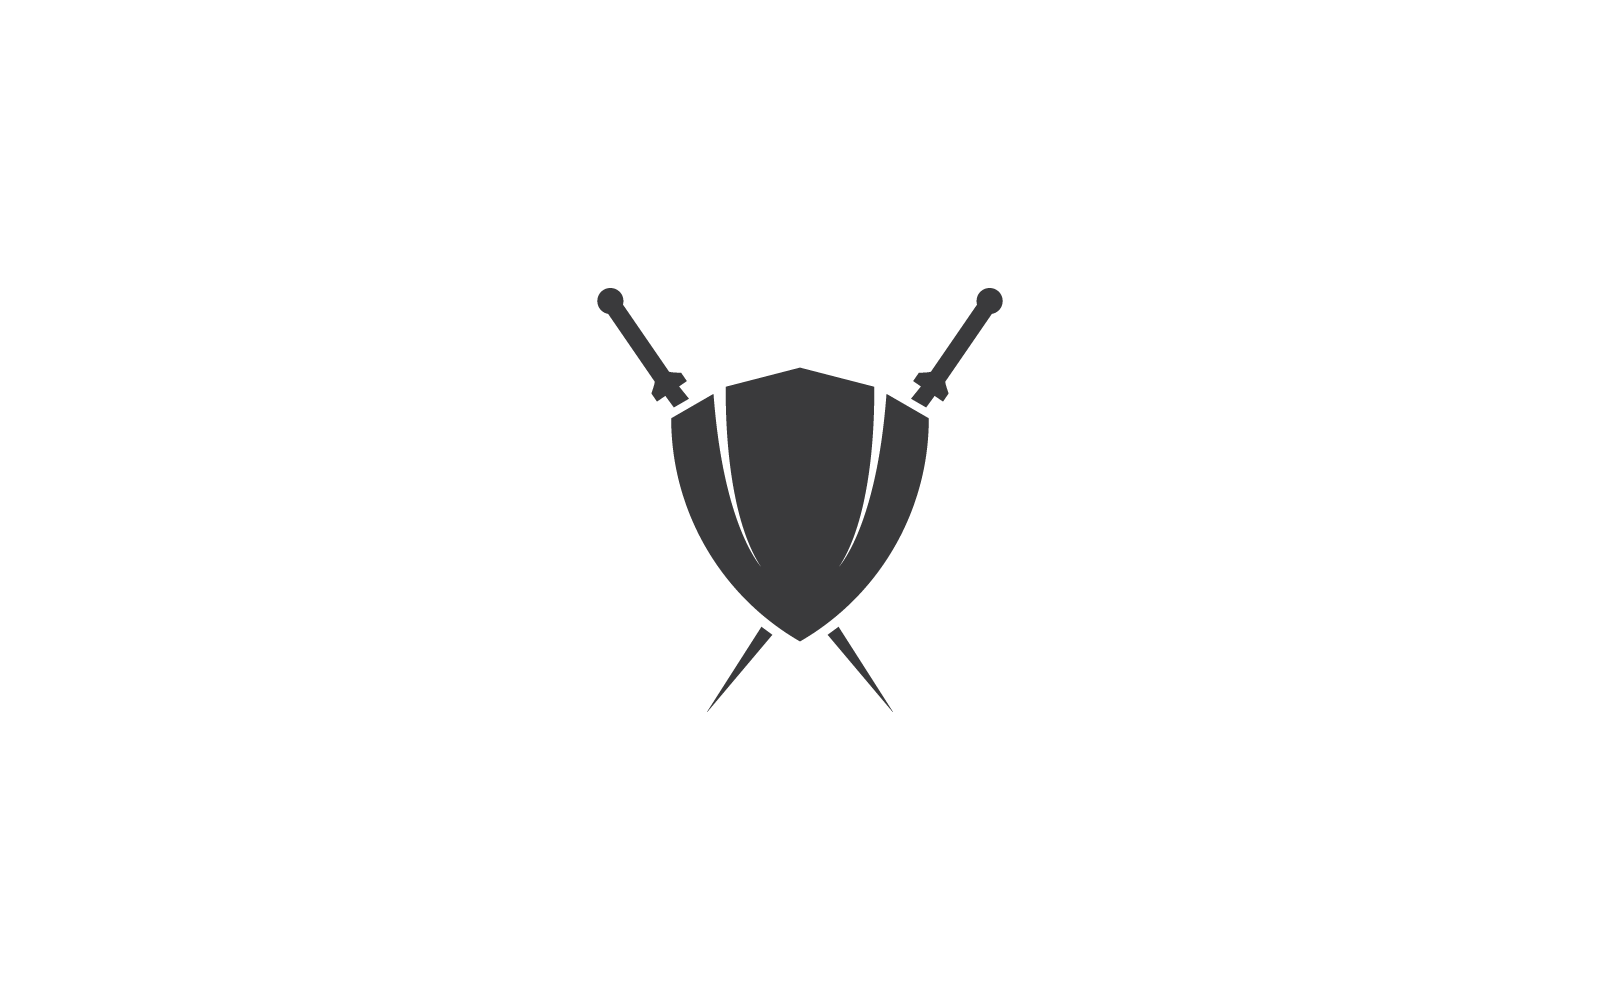 Sword logo vector flat design template